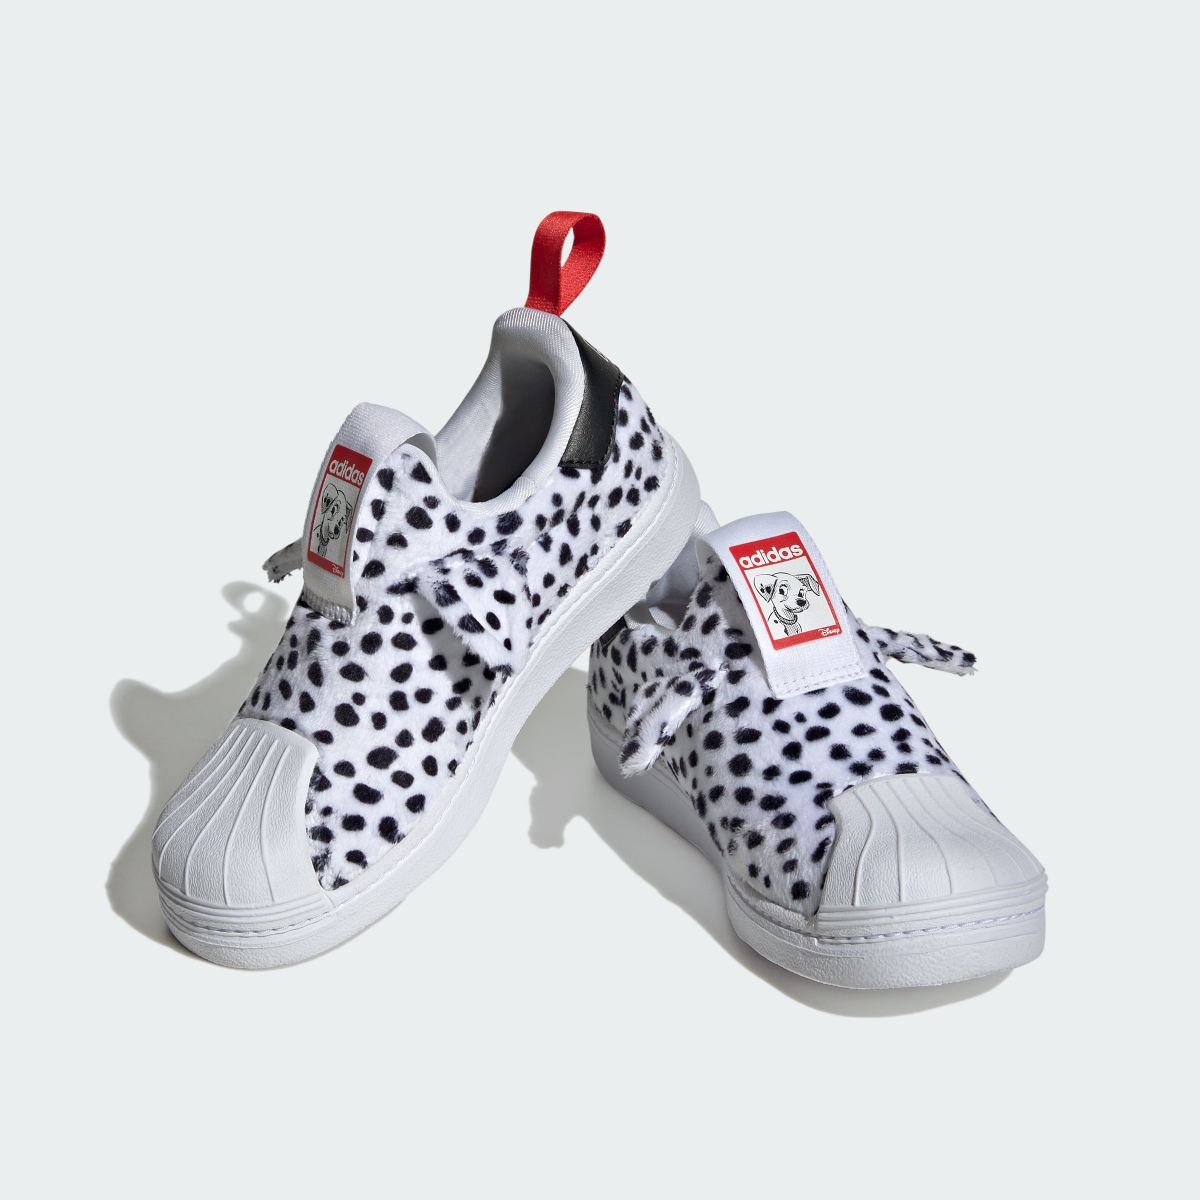 Adidas Scarpe adidas Originals x Disney 101 Dalmatians Superstar 360 Kids. 5